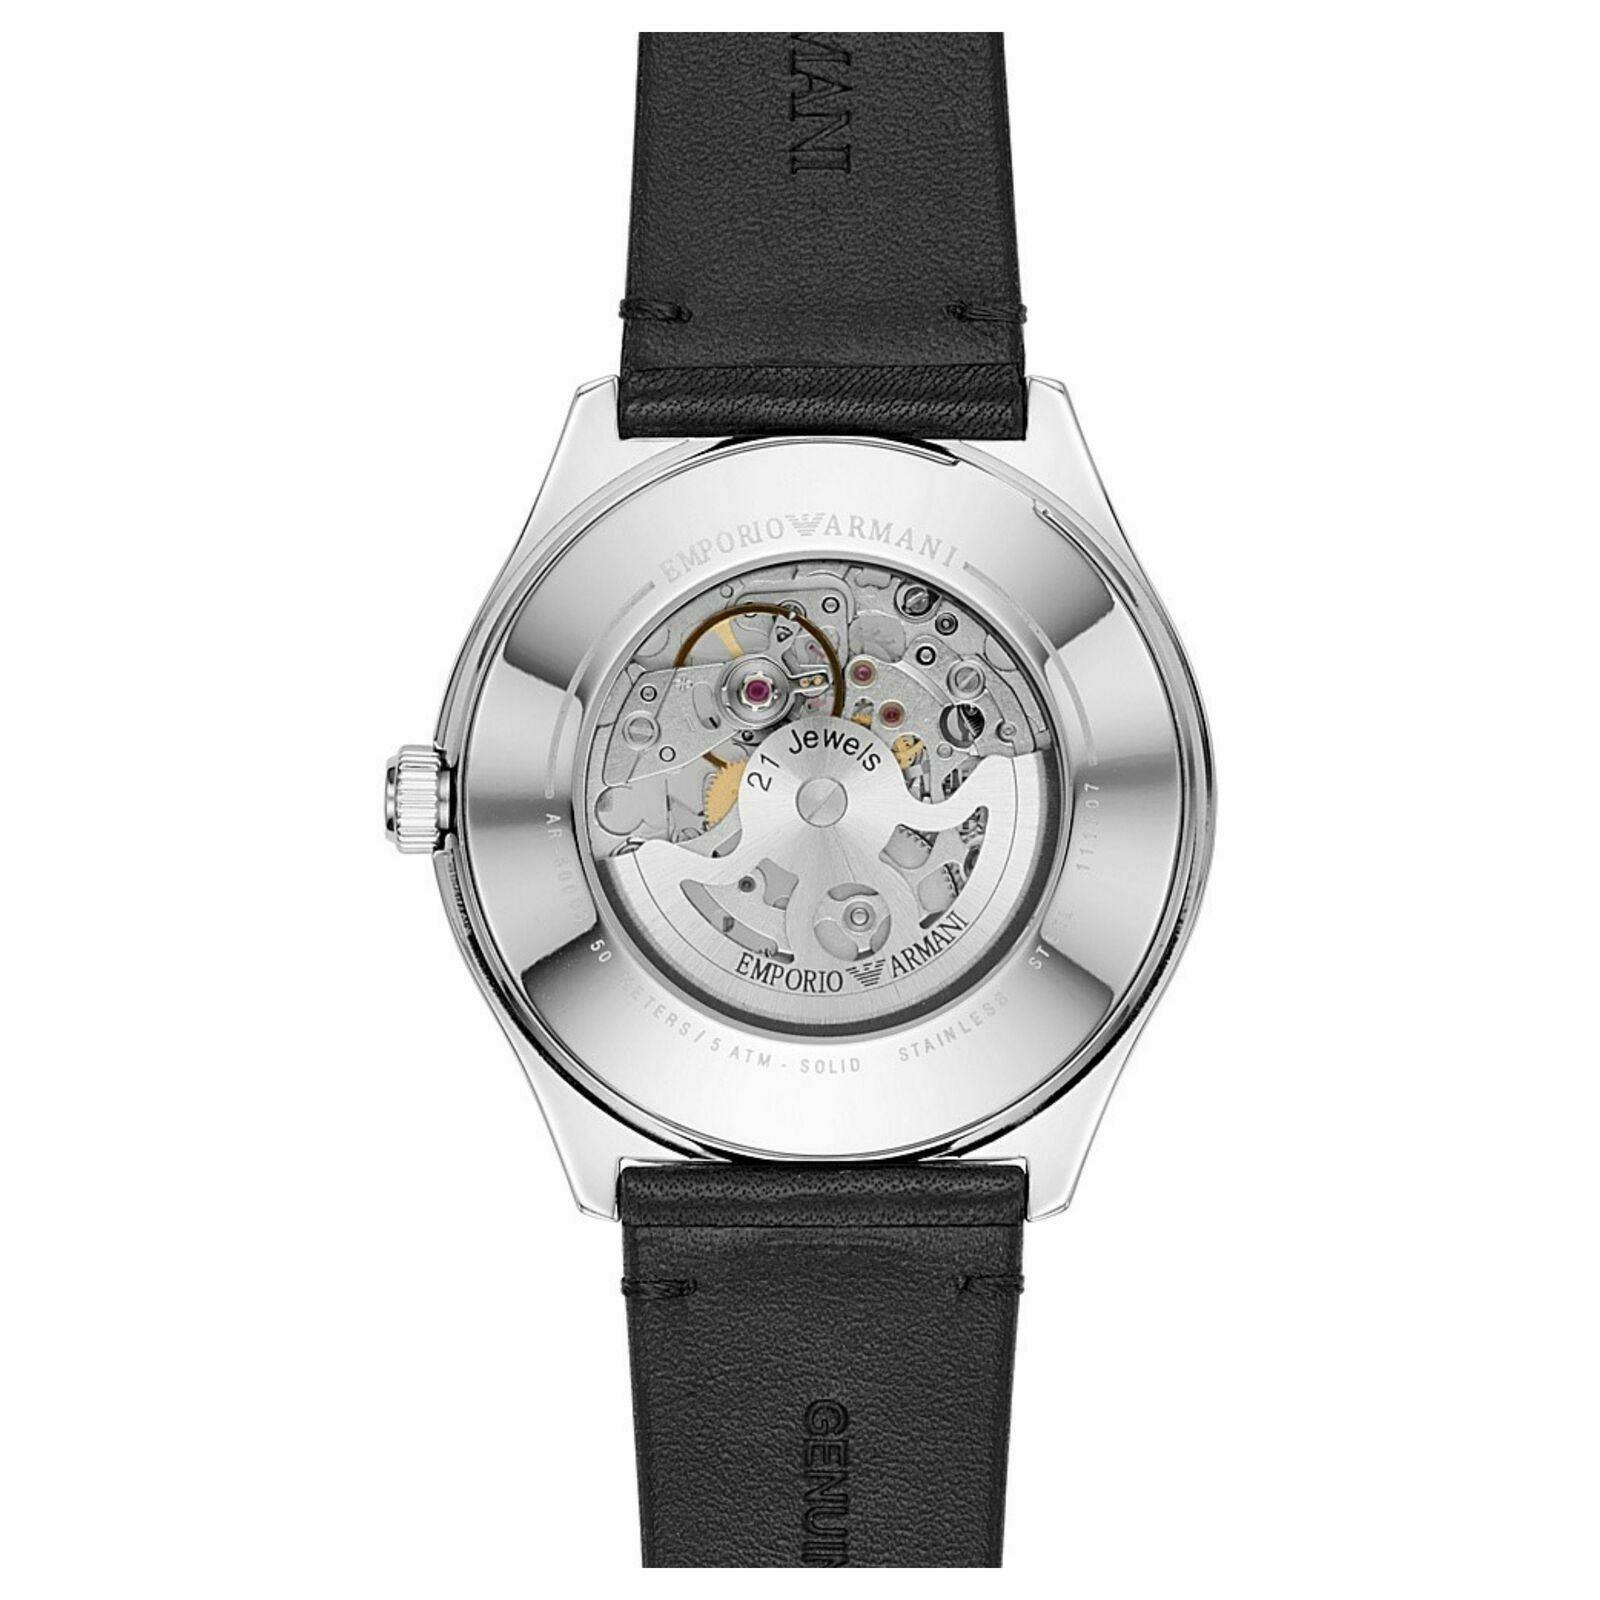 Emporio Armani AR60003 Automatic Black Leather Skeleton Men's Watch - Watch Home™